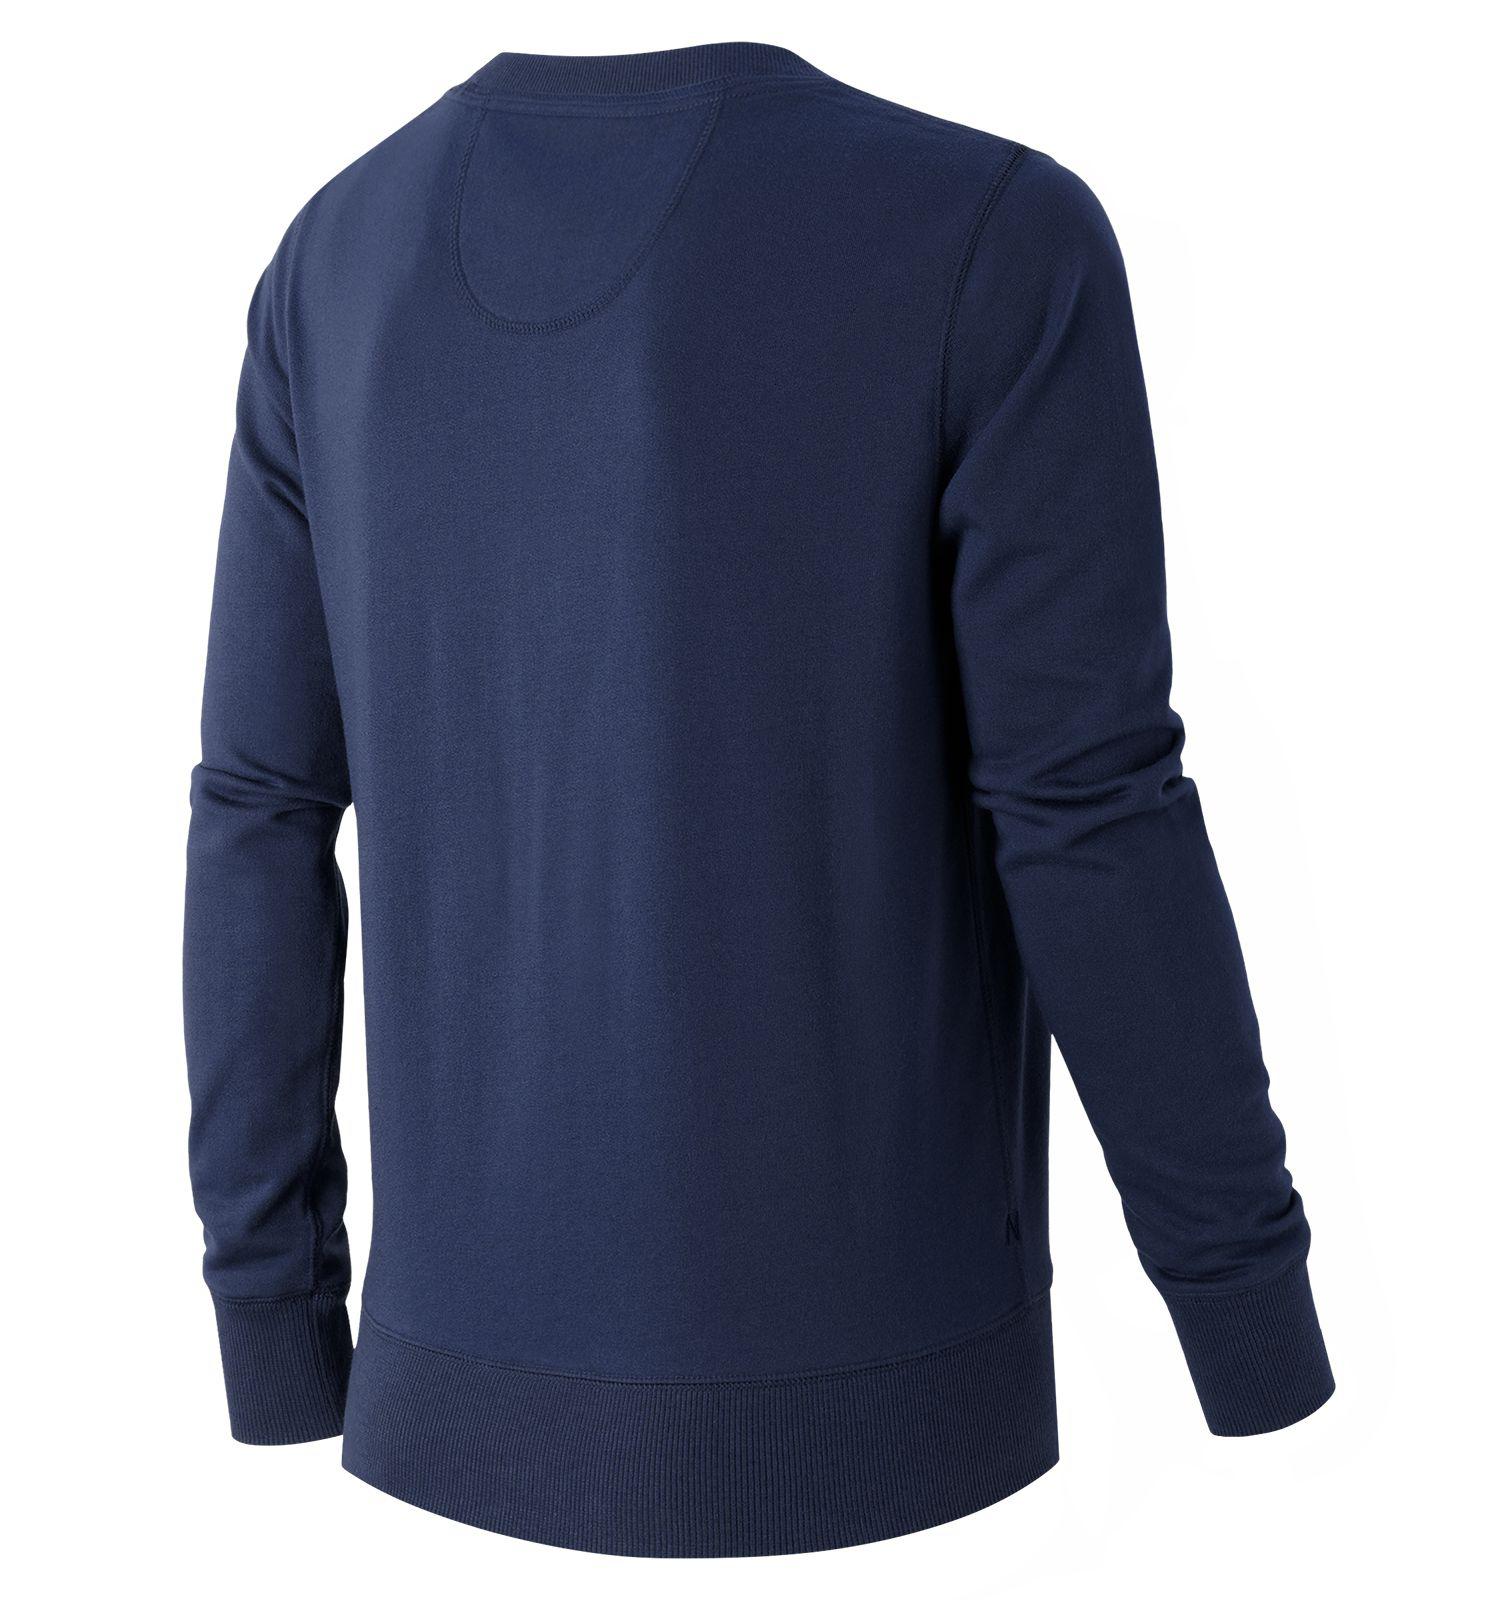 New Balance Cotton Essentials Plus Solid Crewneck in Navy (Blue) - Lyst